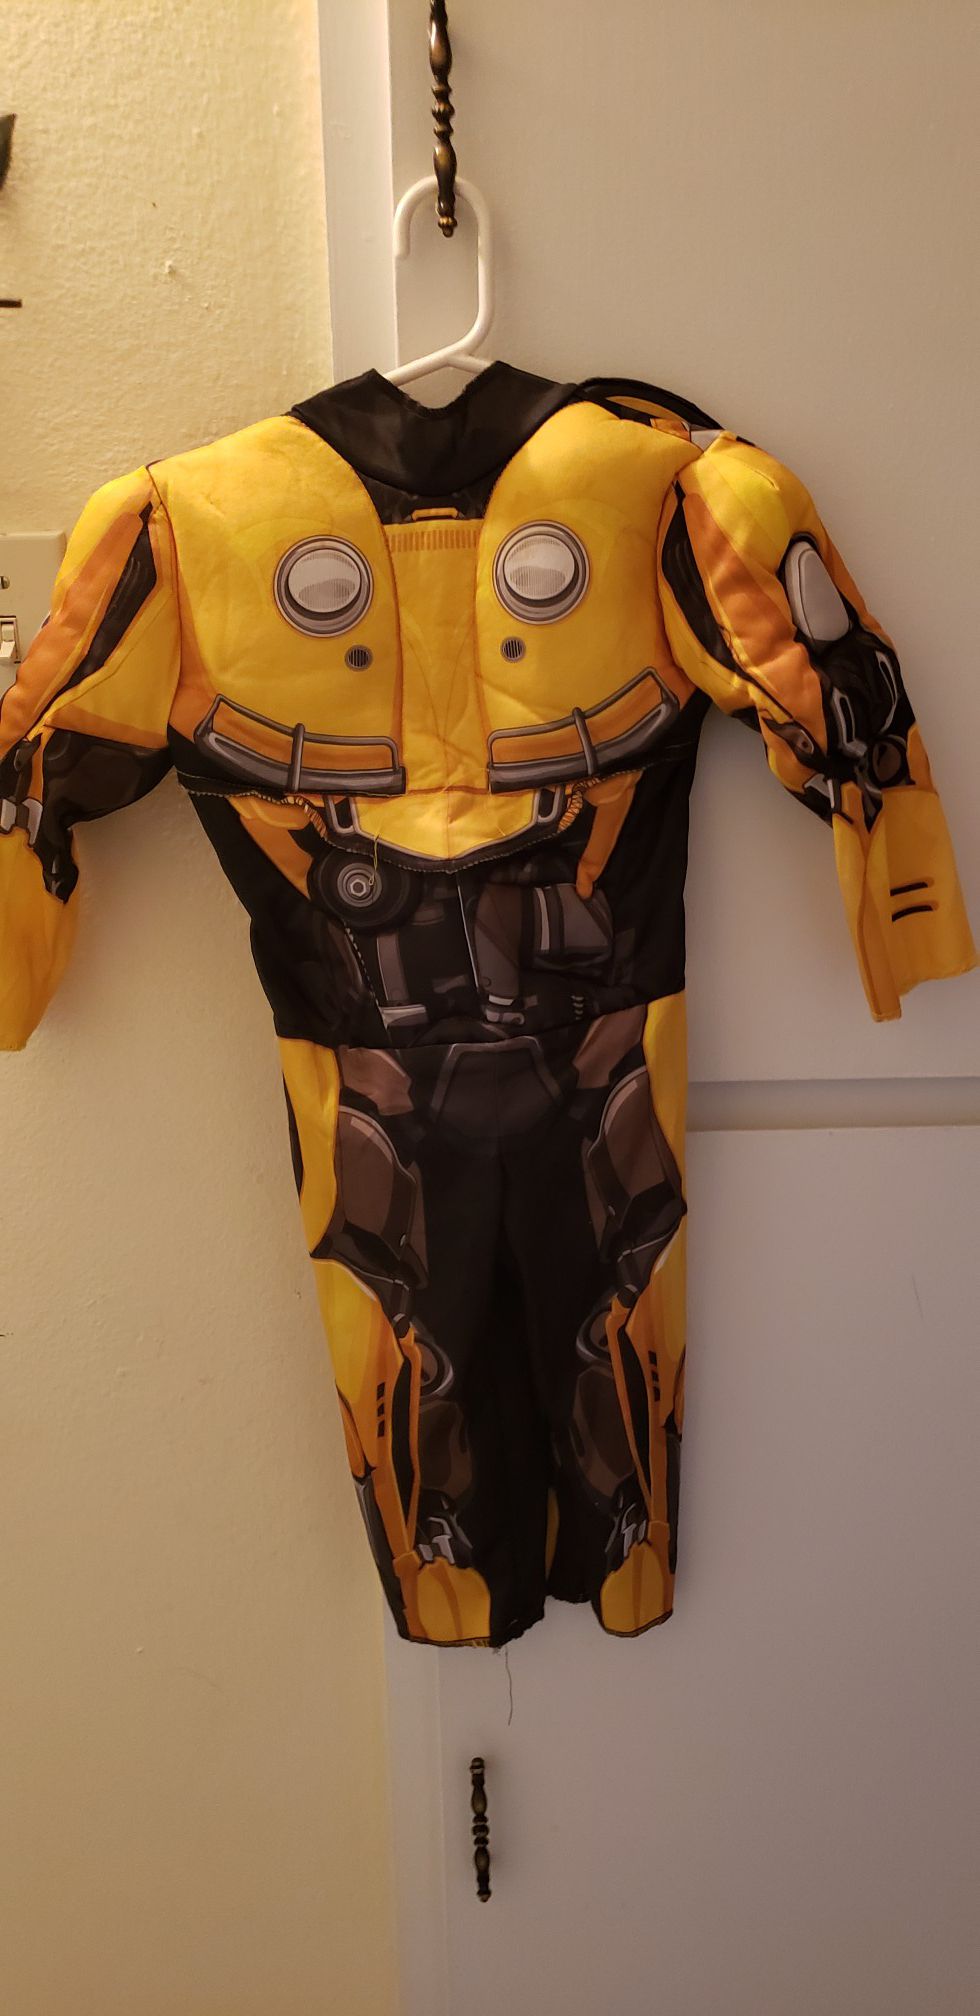 Transformer costume 5$